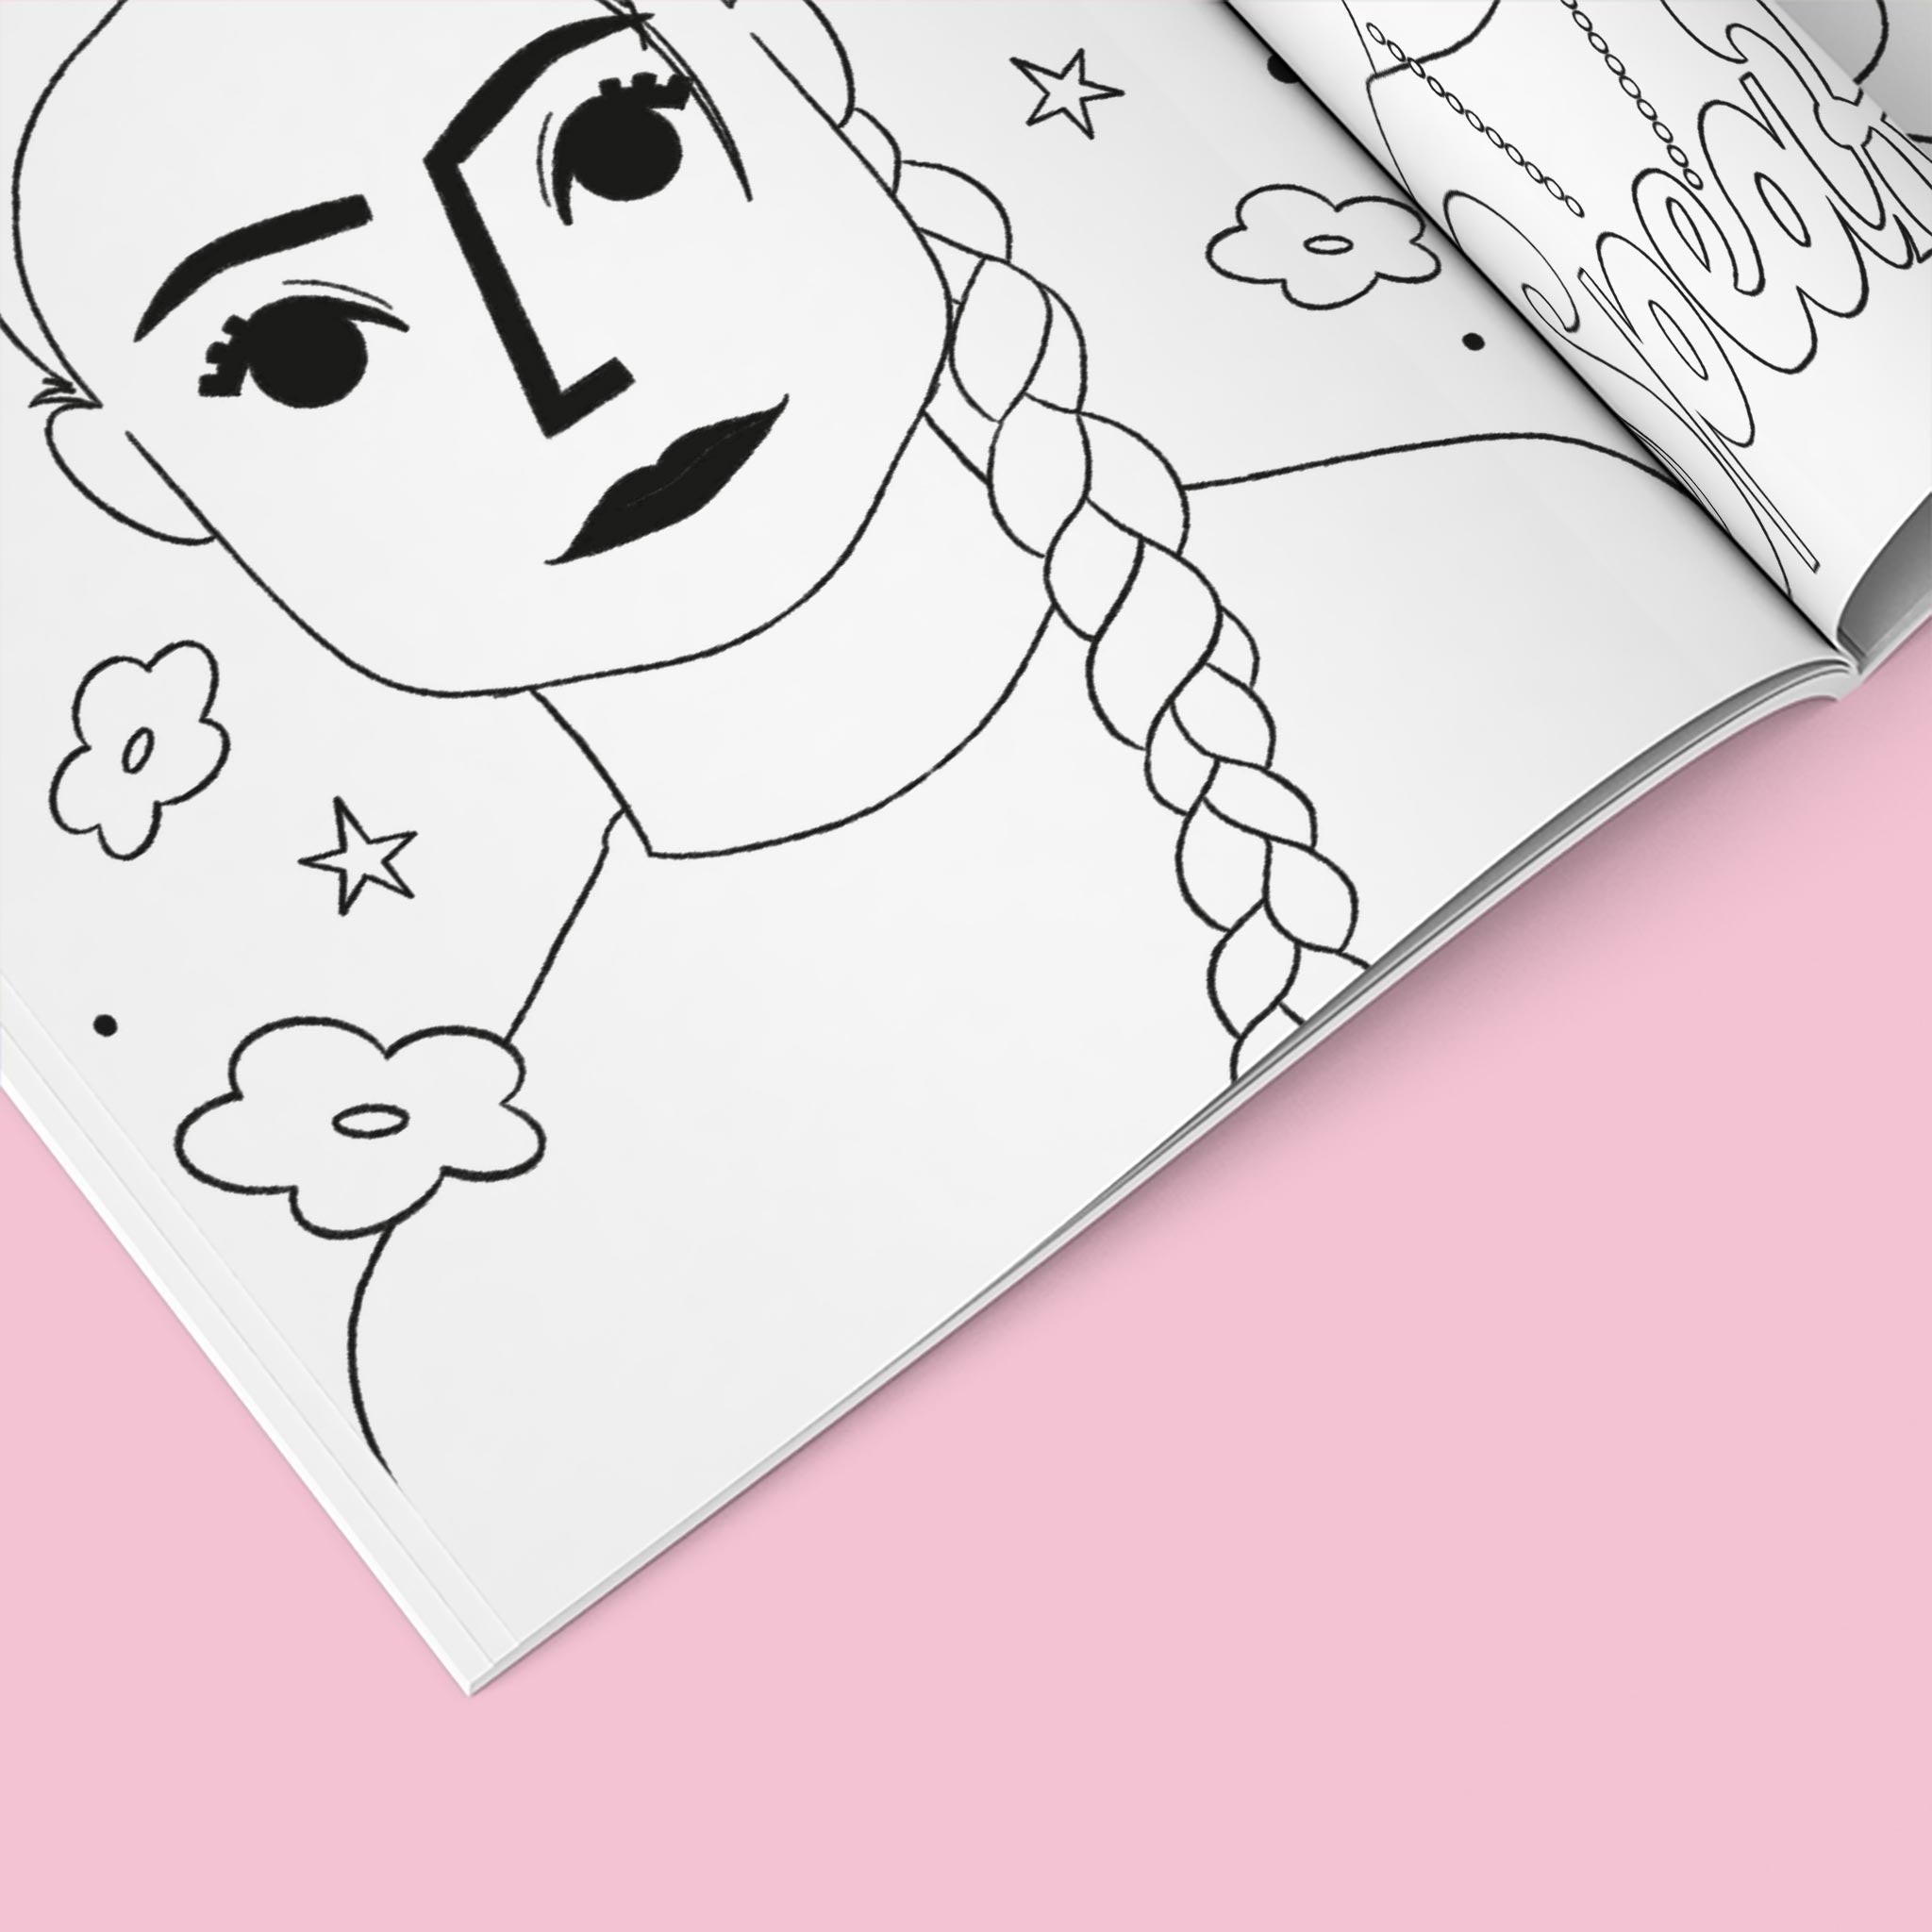 Girl Power Coloring Book